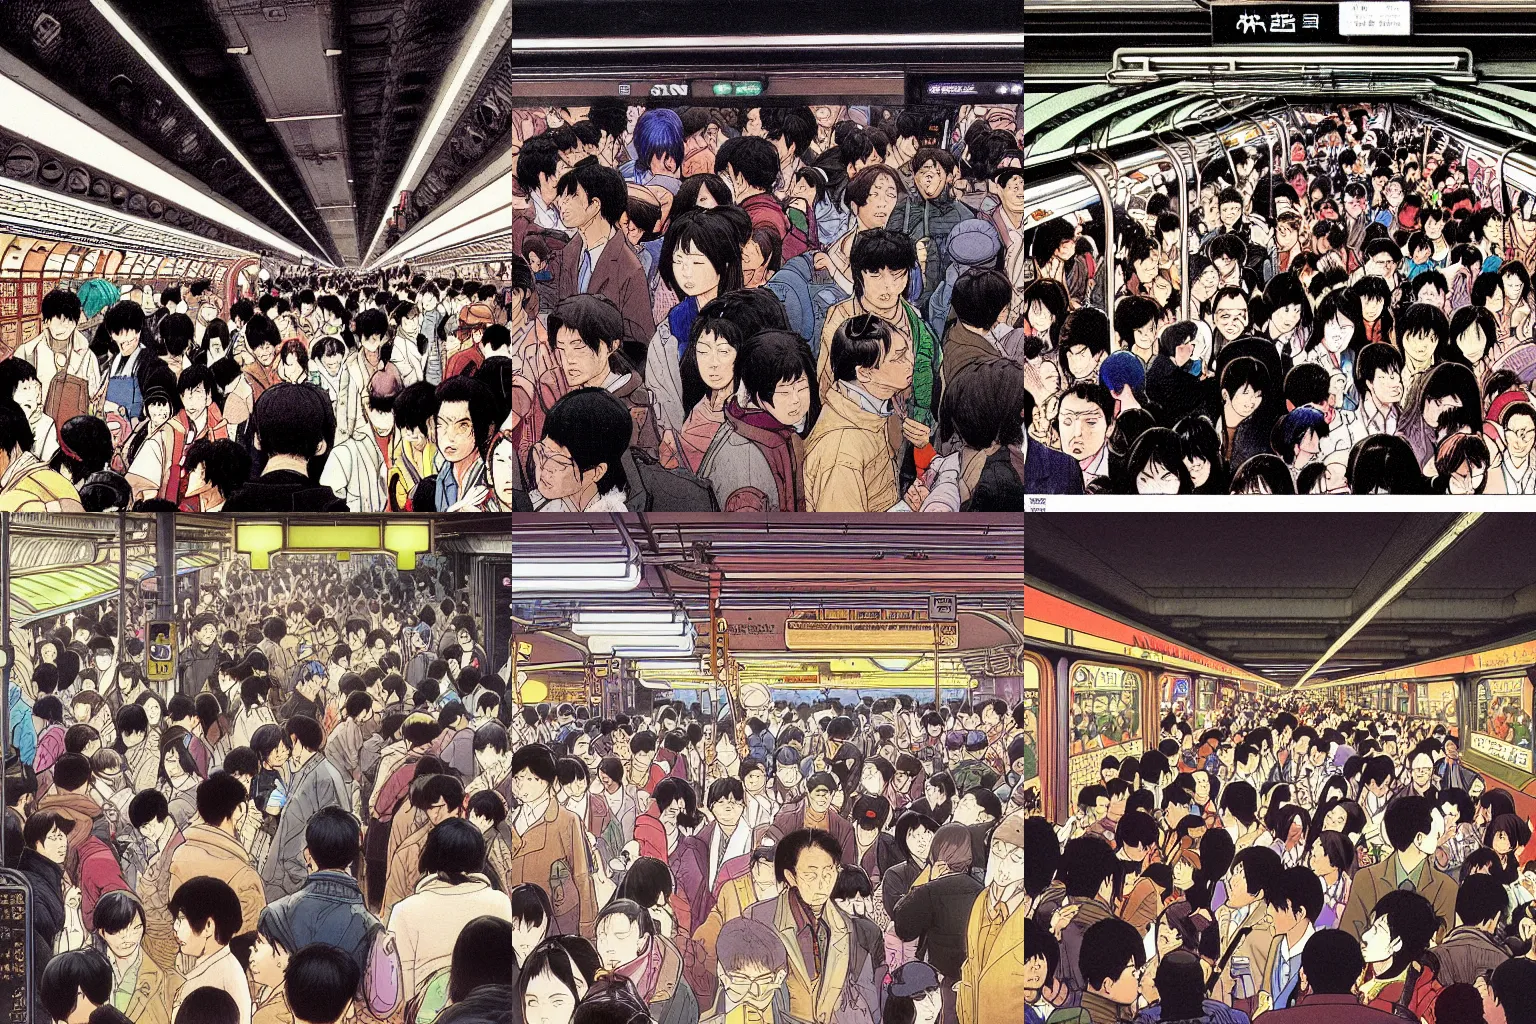 Prompt: Intricate illustration of a packed subway in tokyo, mike mignola, yoshitaka Amano, hiroshi yoshida, moebius, bright pastel color